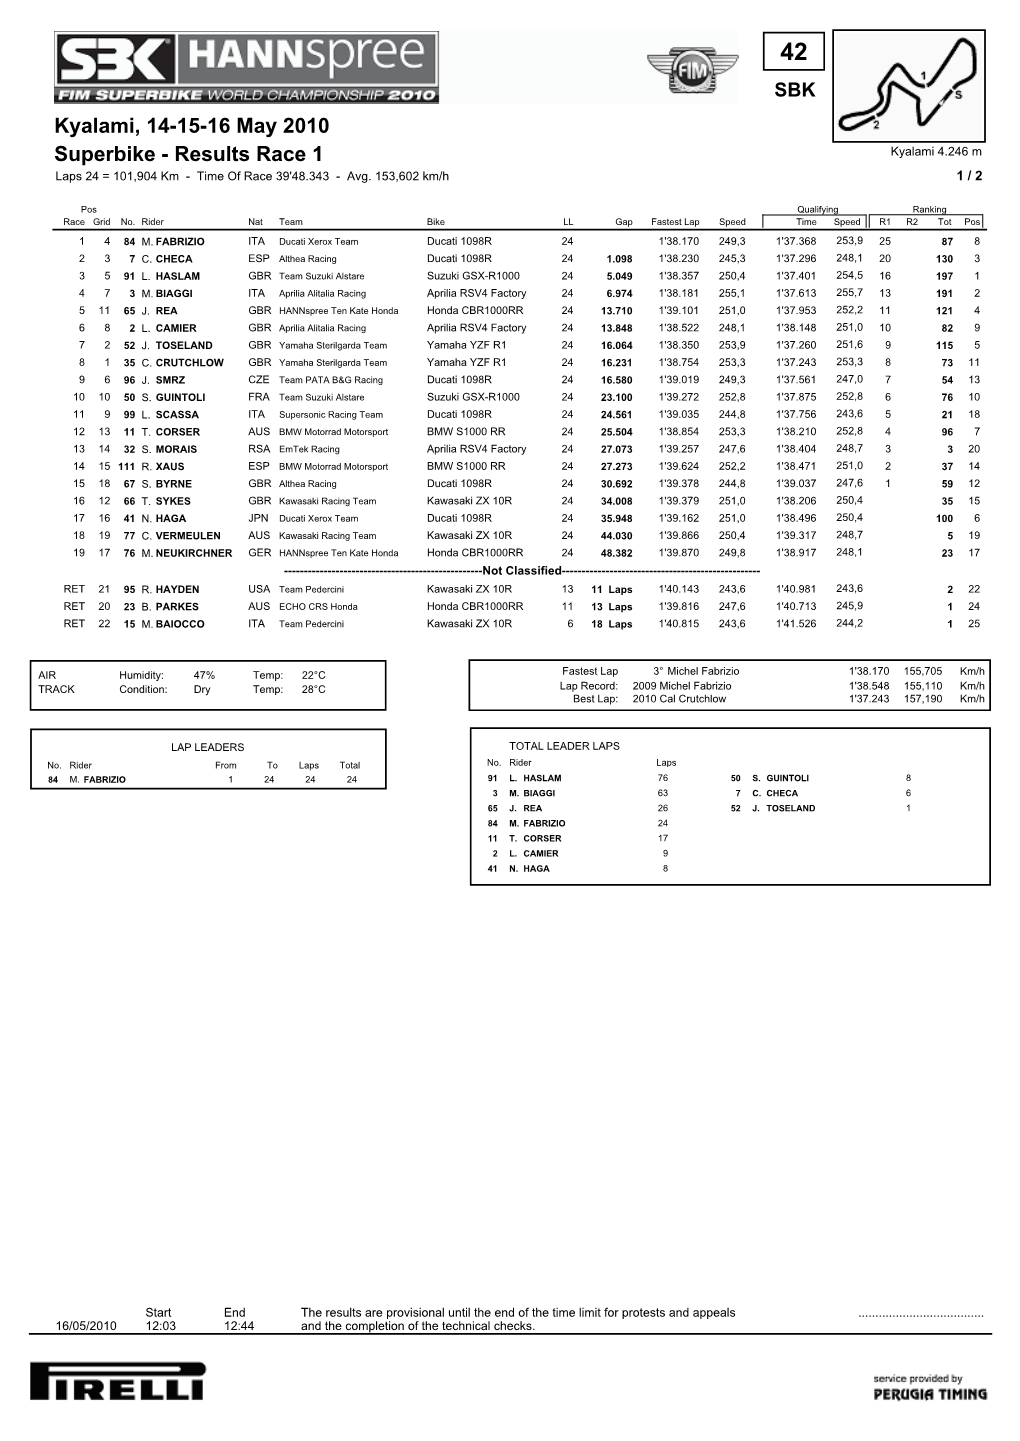 Superbike - Results Race 1 Kyalami 4.246 M Laps 24 = 101,904 Km - Time of Race 39'48.343 - Avg